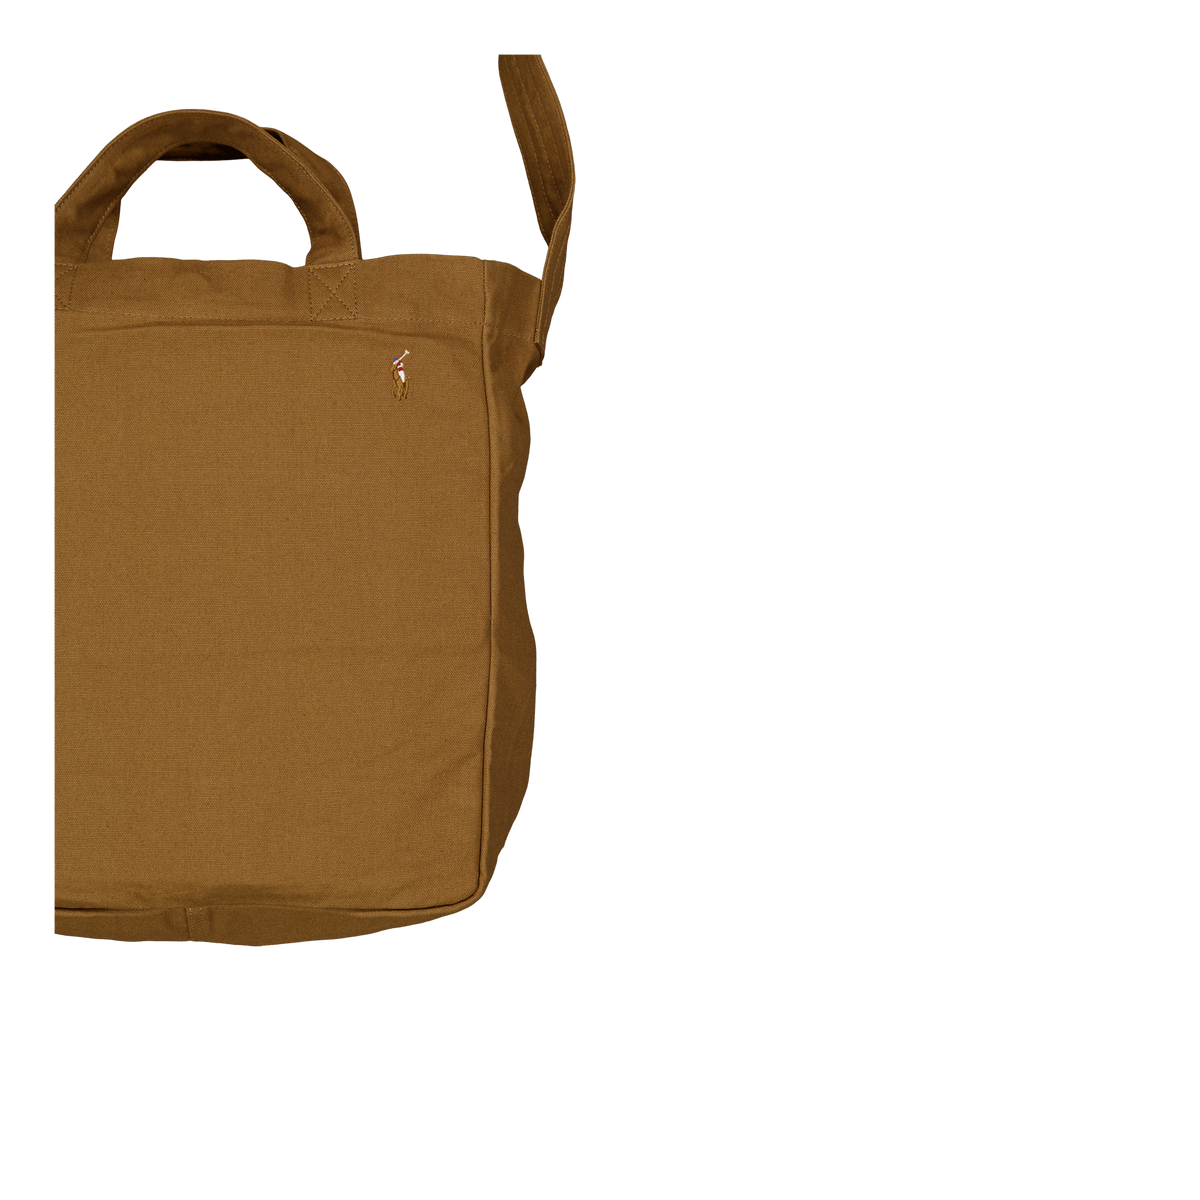 Polo Ralph Lauren Canvas Shopper Tote Bag 002 Rustic Tan